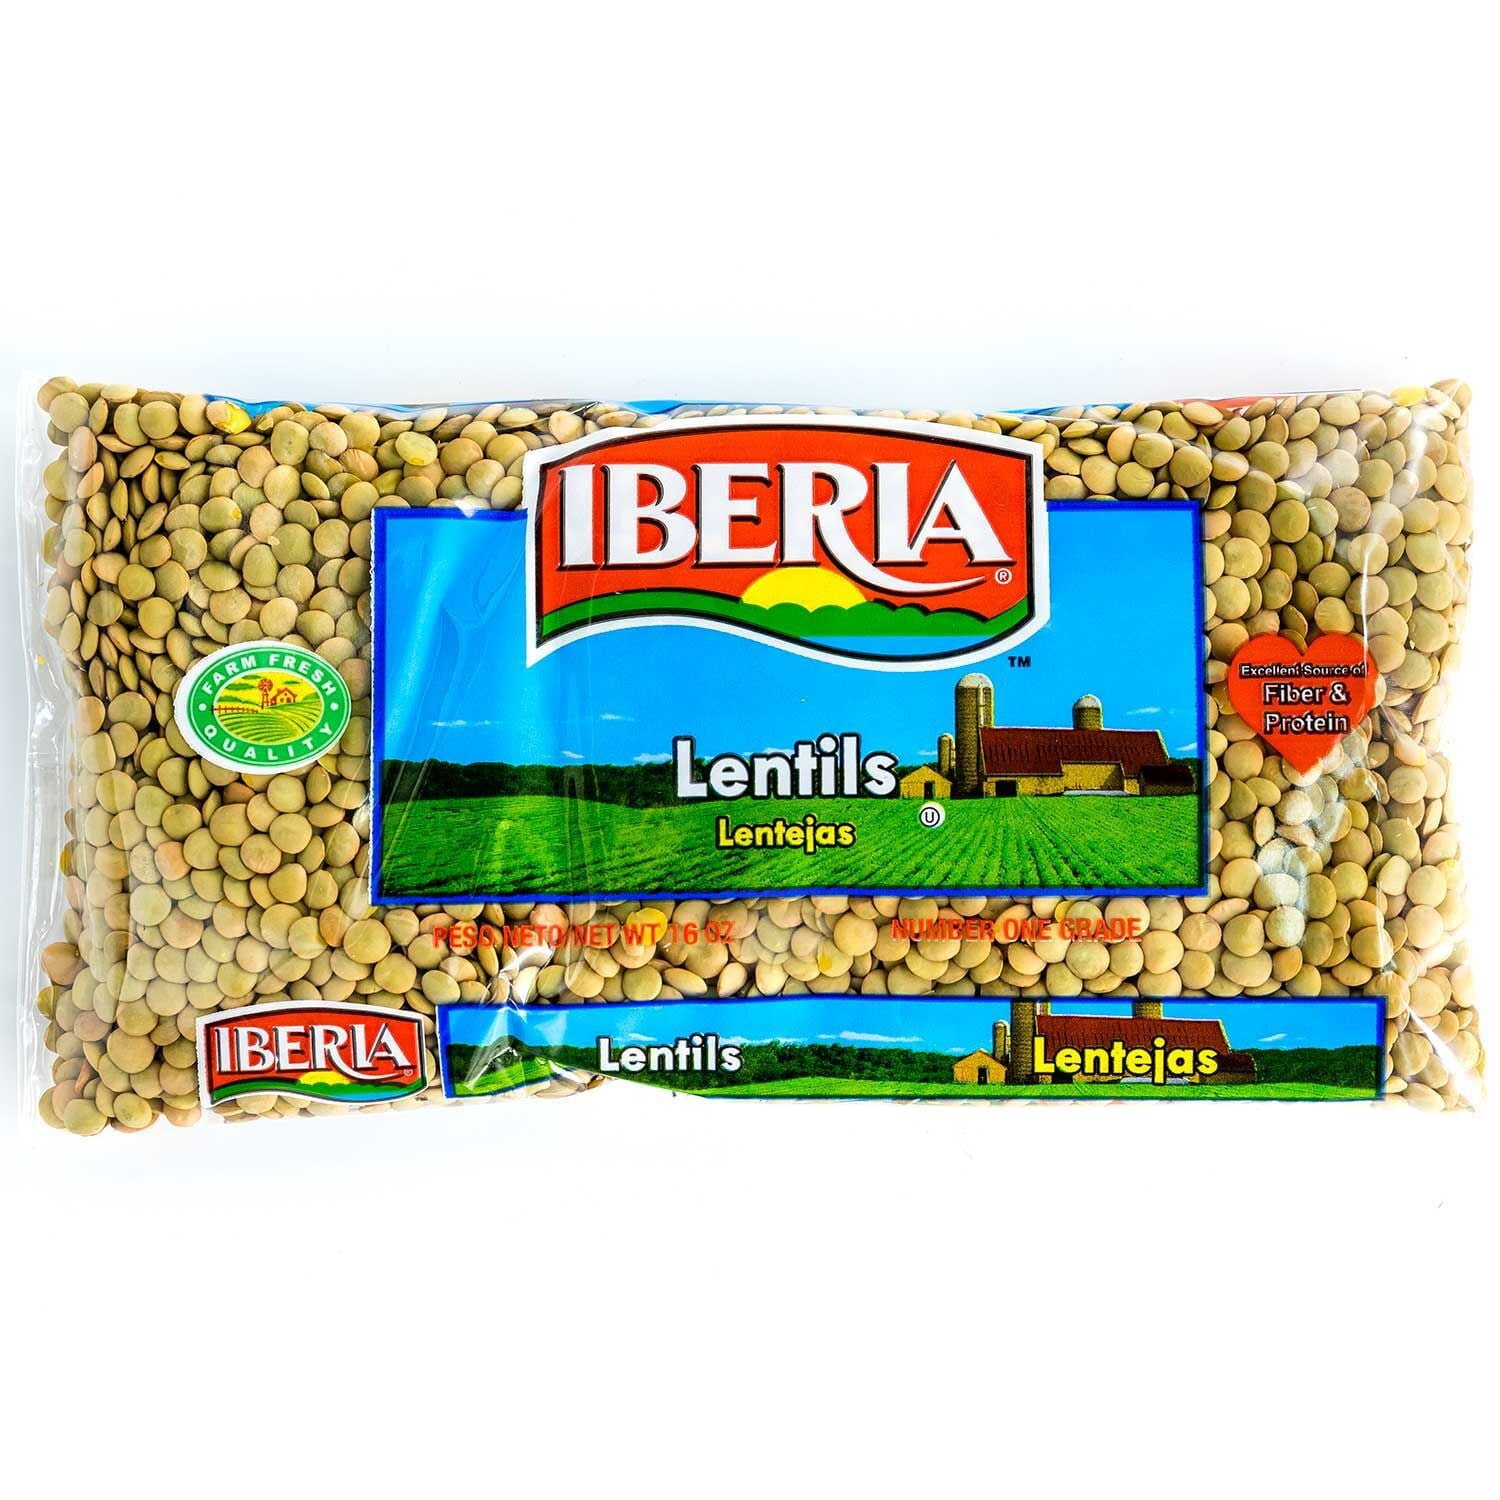 Iberia Lentil Beans, Lentejas, 16 oz Bag